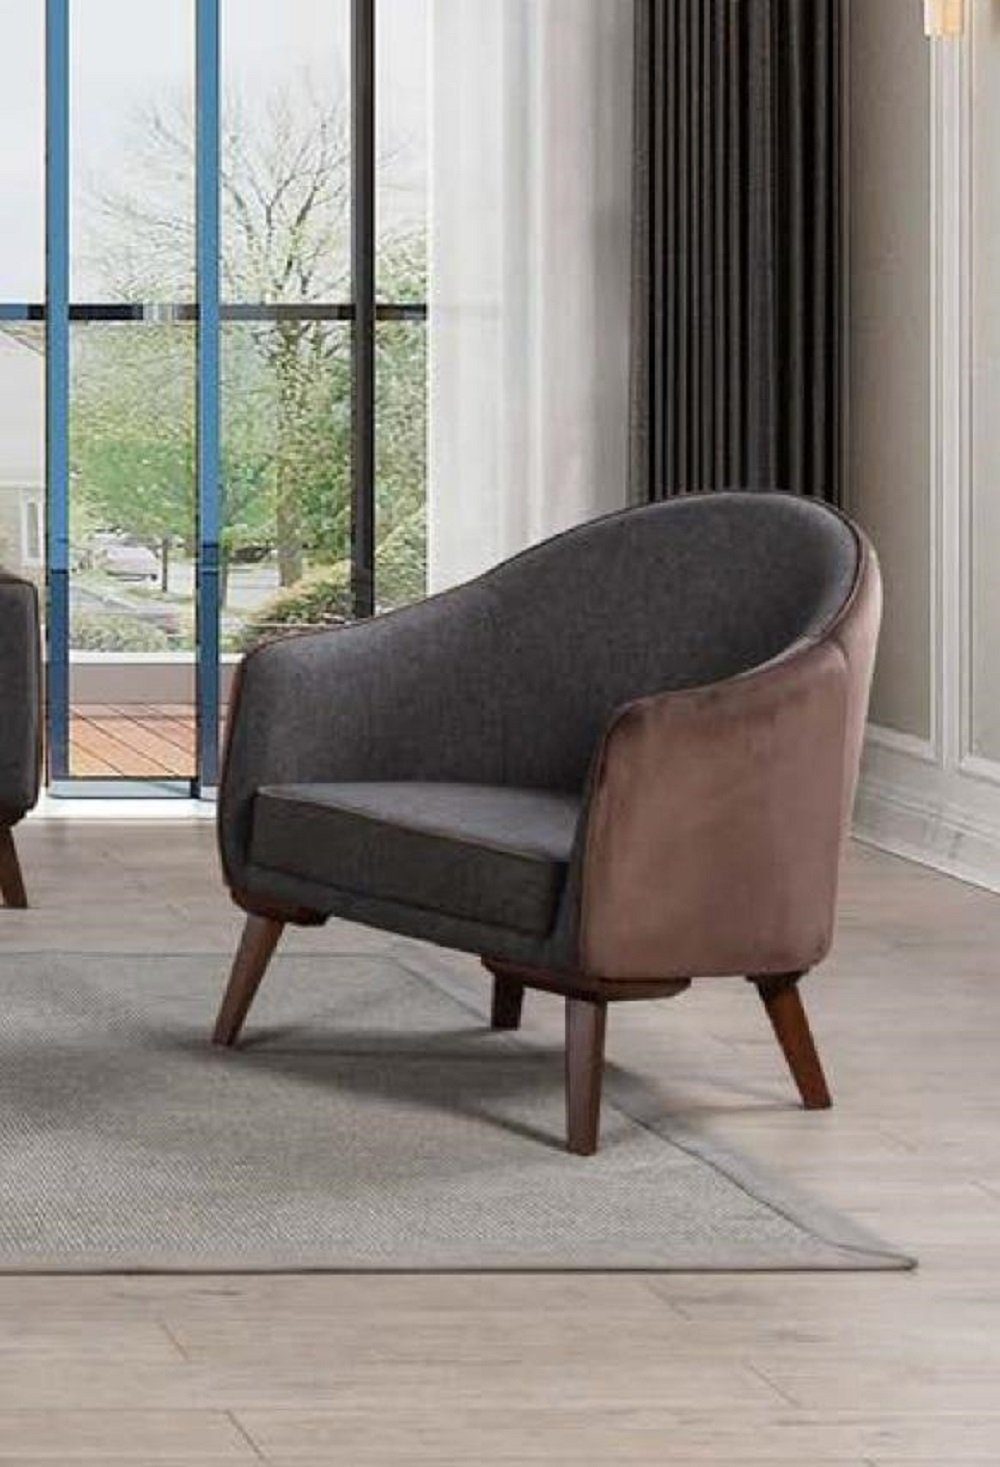 JVmoebel Sofa Moderne Teile Sofa Textil Couch 3tlg., 3 Sofagarnitur Wohnzimmer 3+3+1